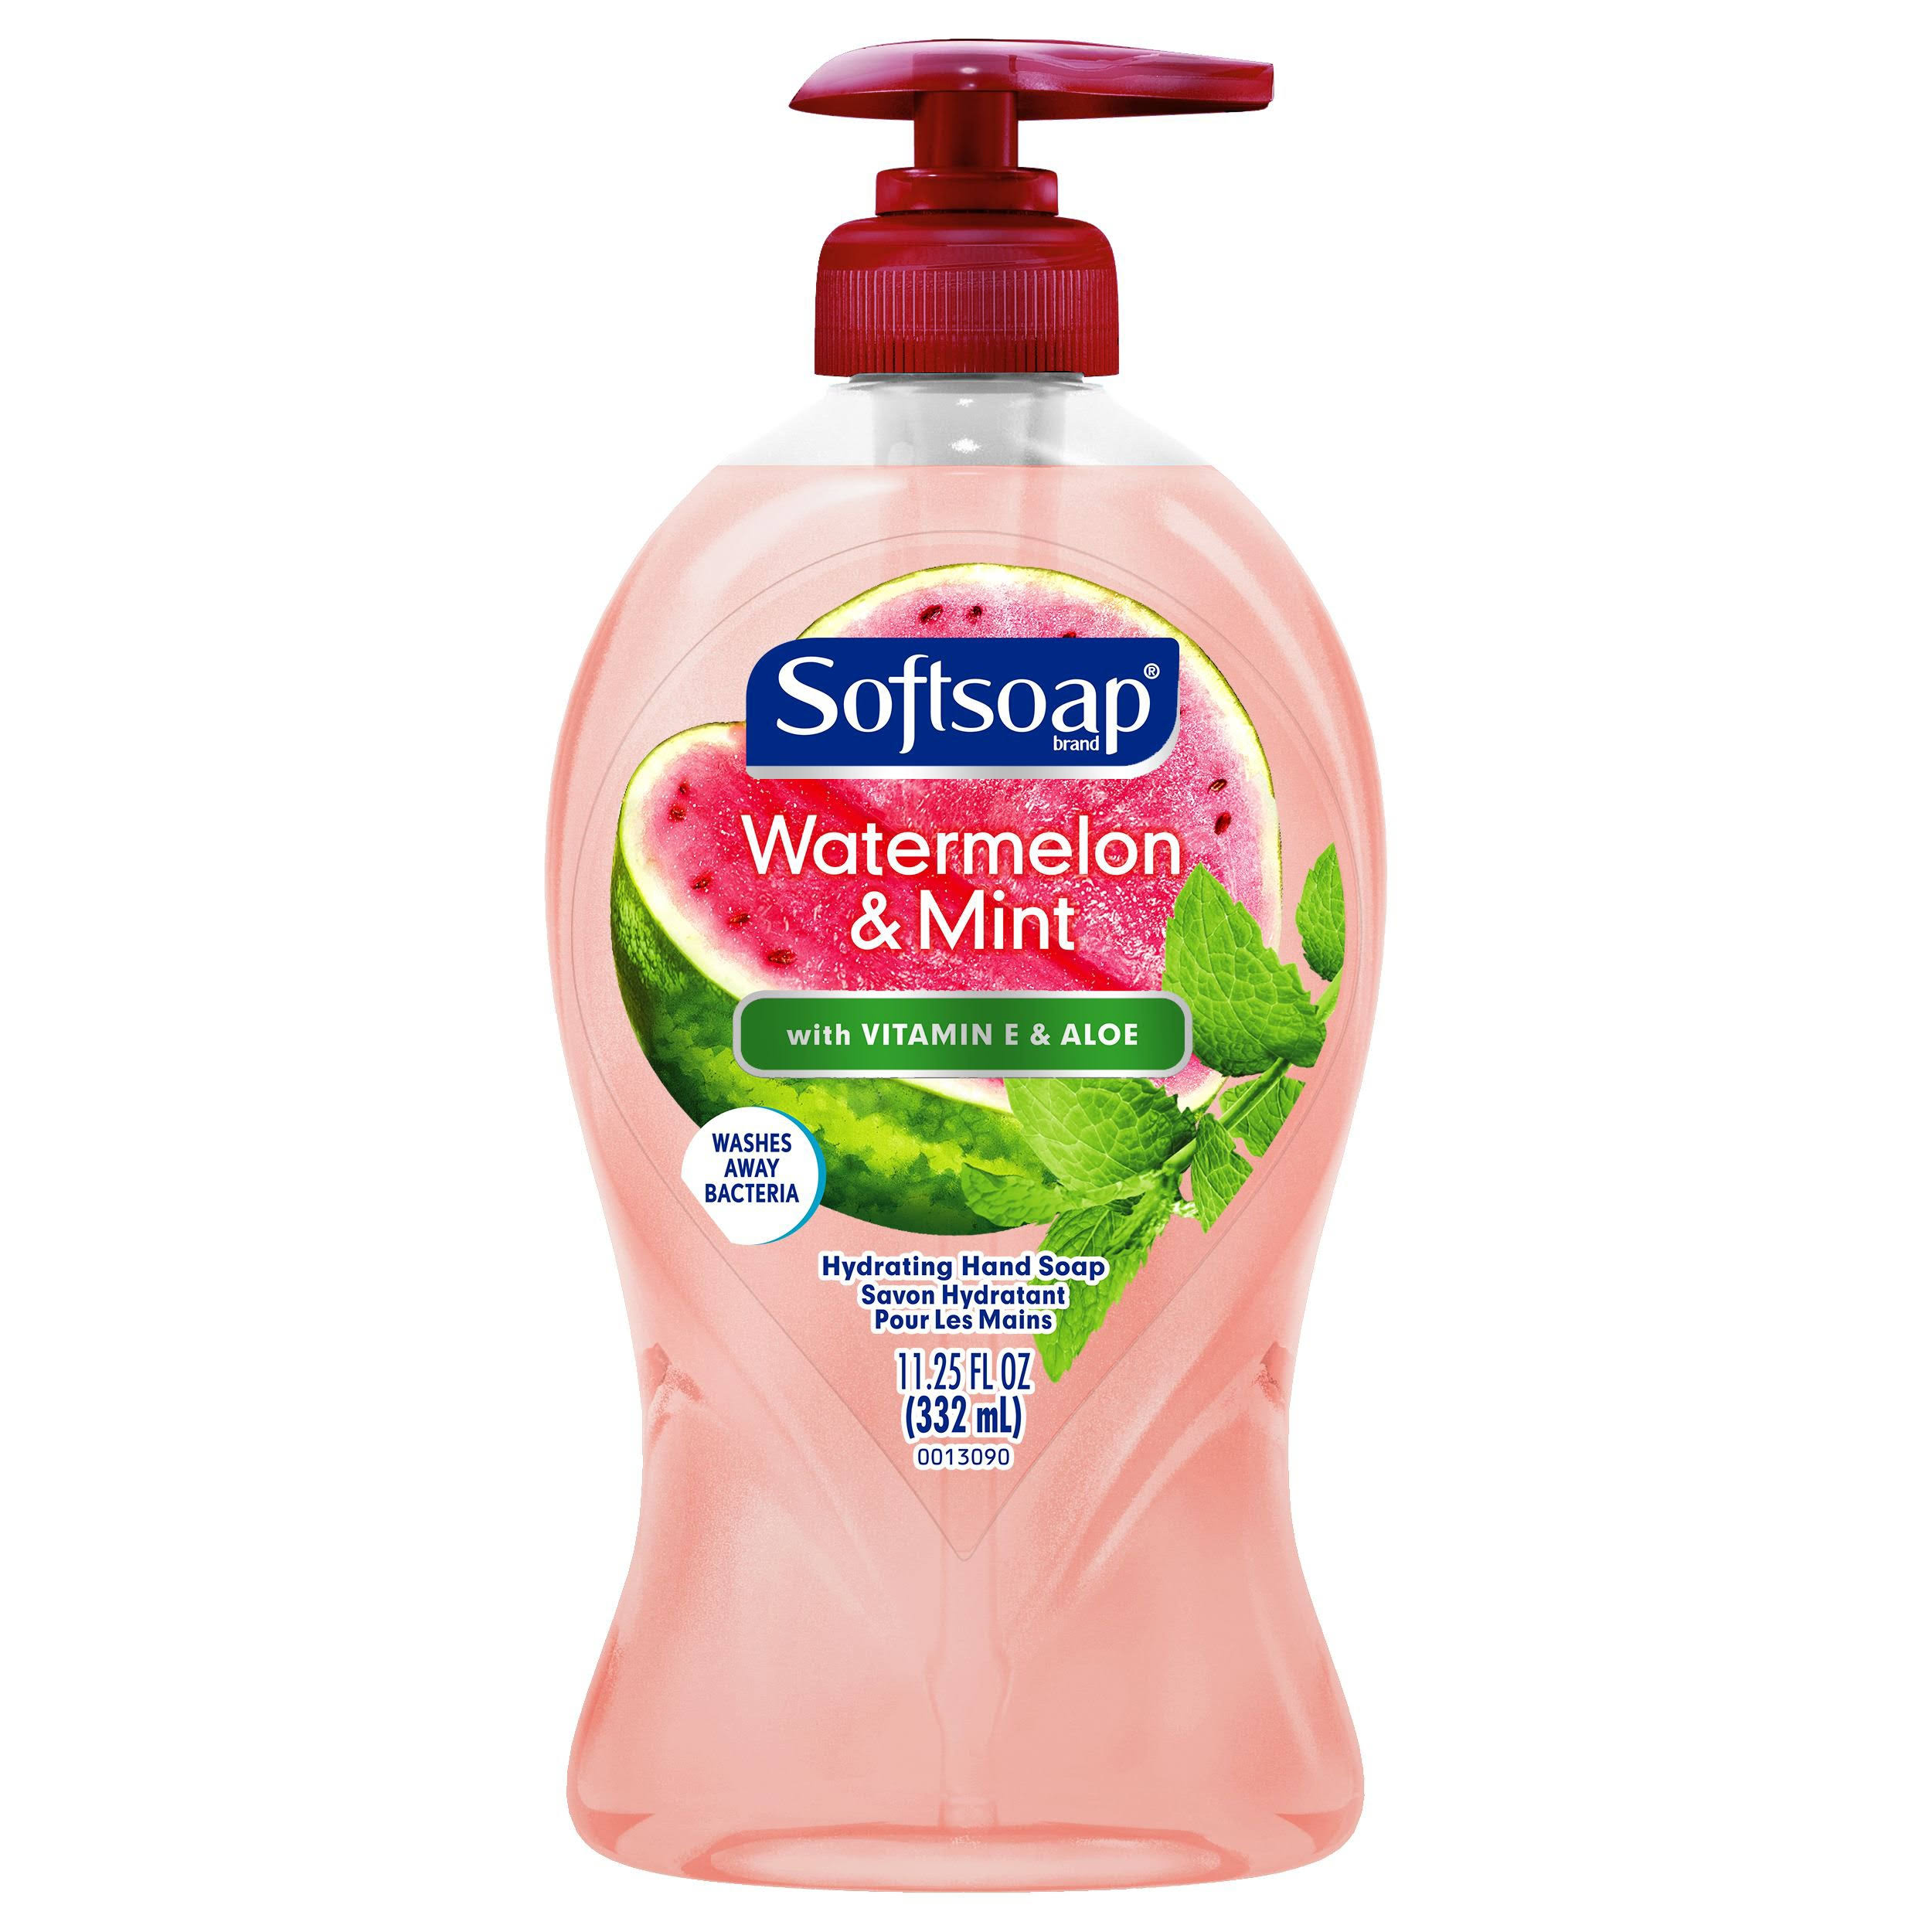 Softsoap Watermelon & Mint Hand Soap 11.25 fl oz